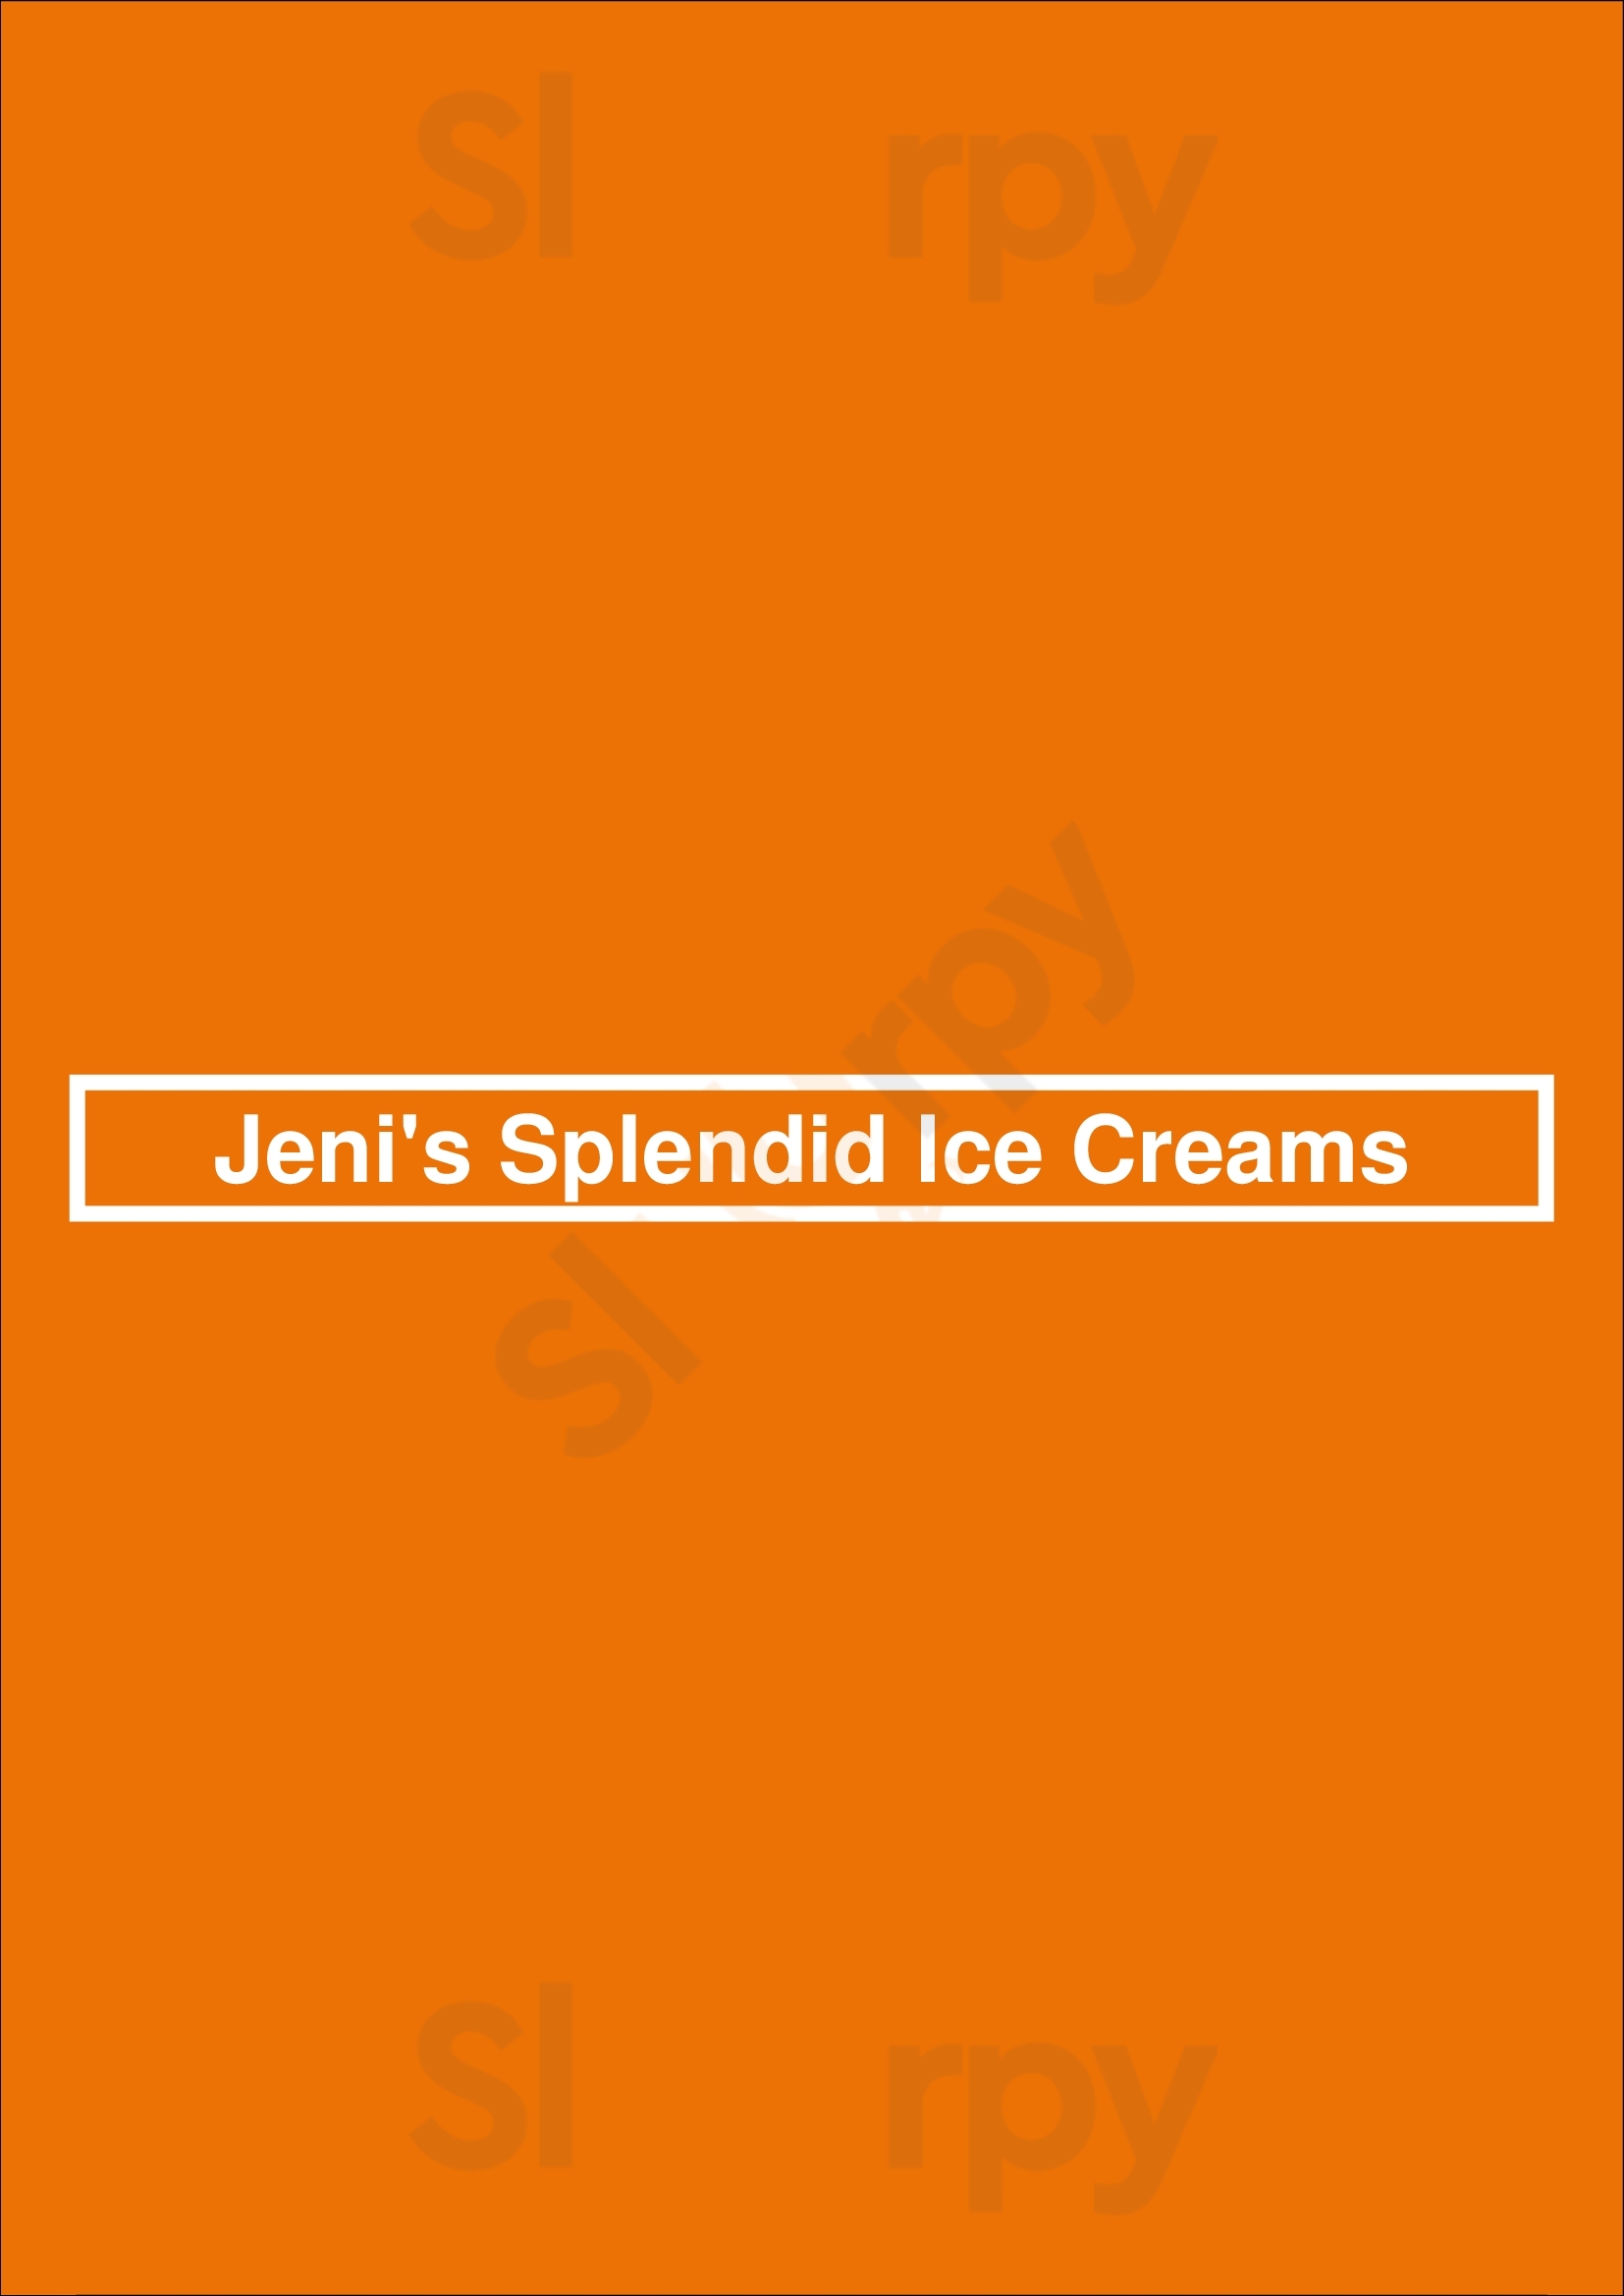 Jeni's Splendid Ice Creams Saint Louis Menu - 1